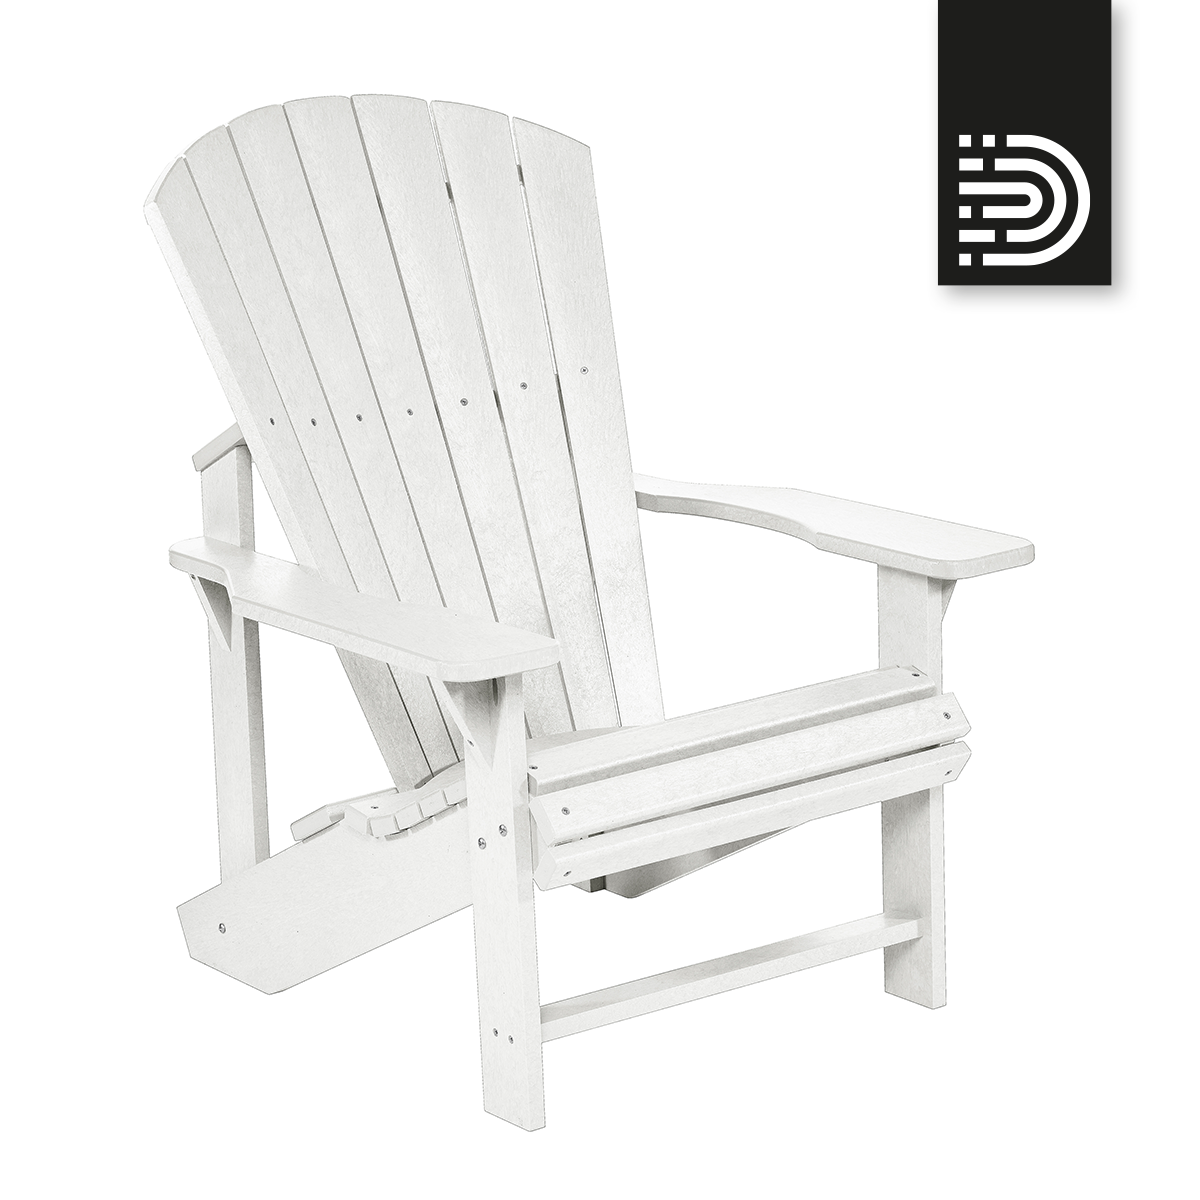  C01 Classic Adirondack Chair - white 02 AKTION 2er Set